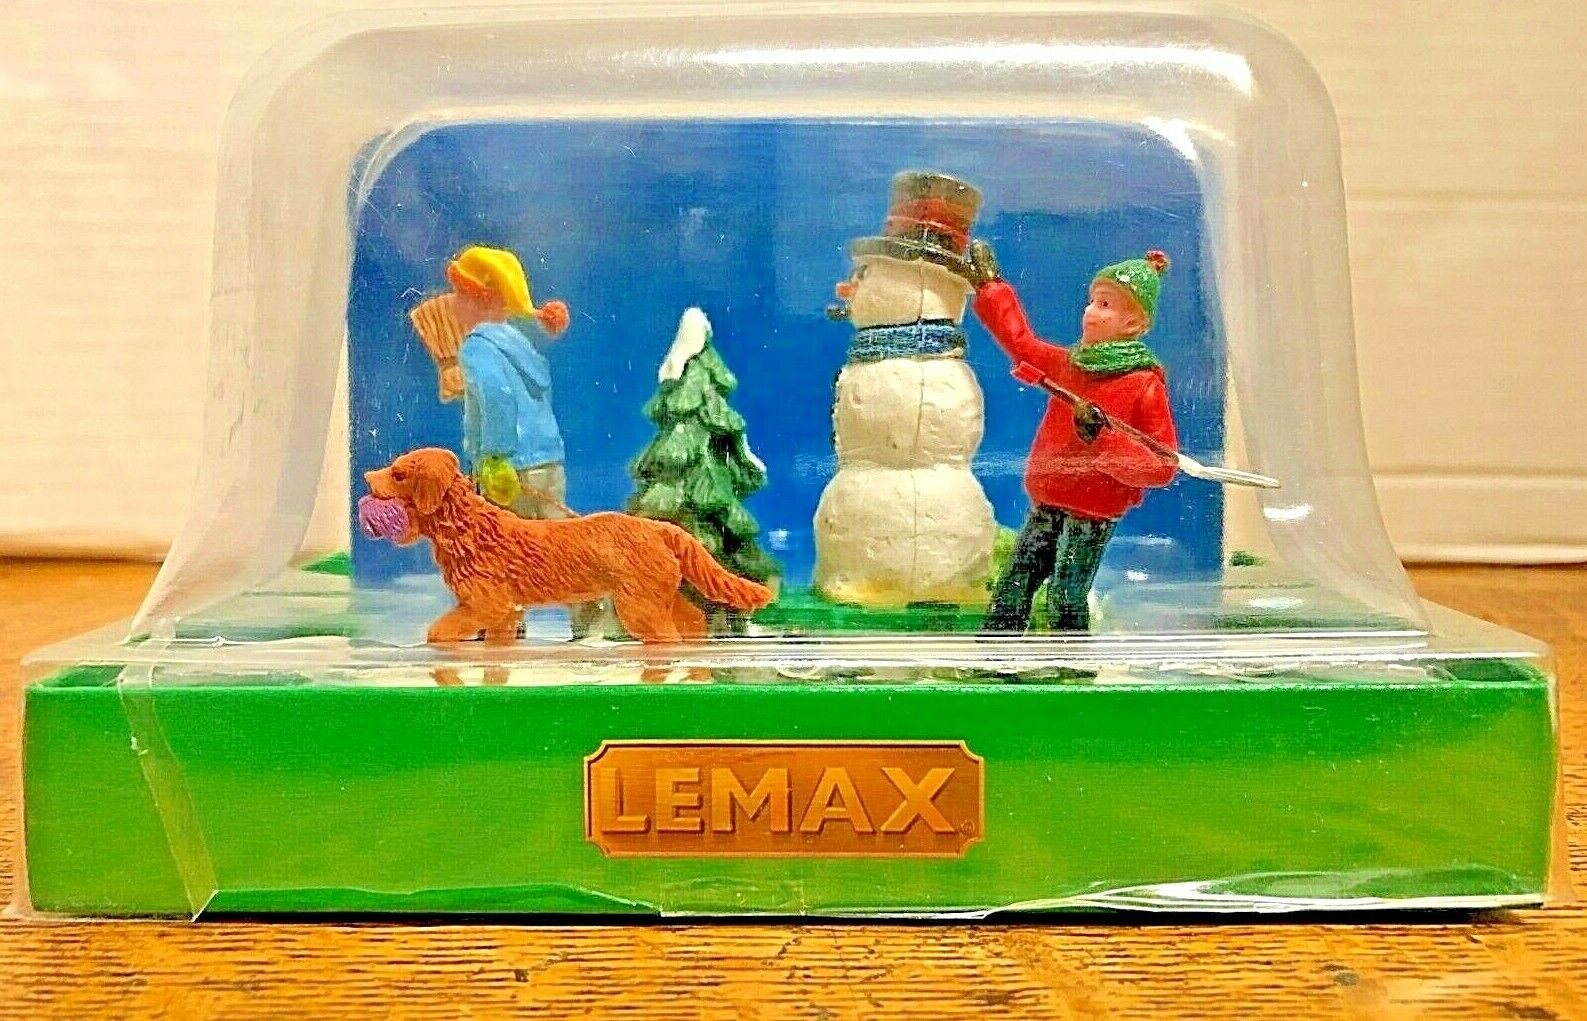  LEMAX - Snowman Transport - #33033 - Table Accent - 2013